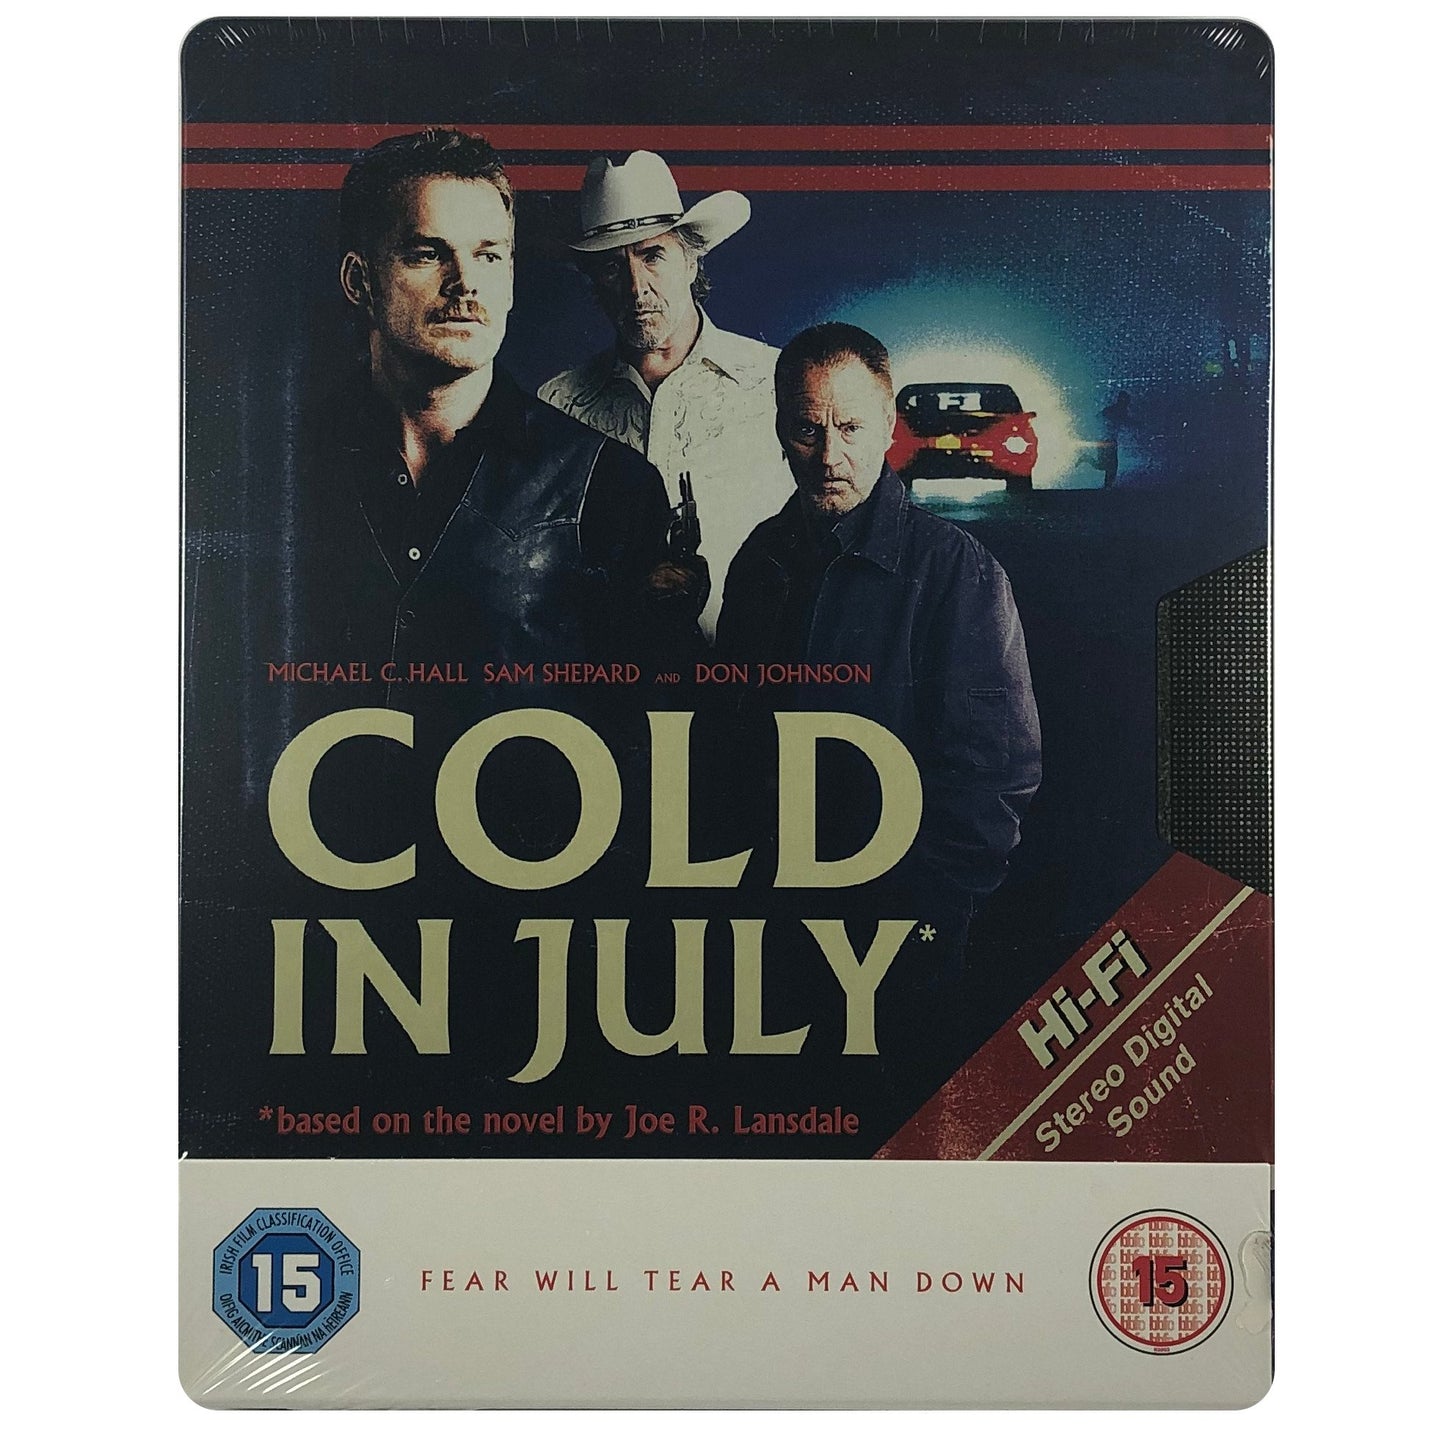 Cold In July Blu-Ray Steelbook